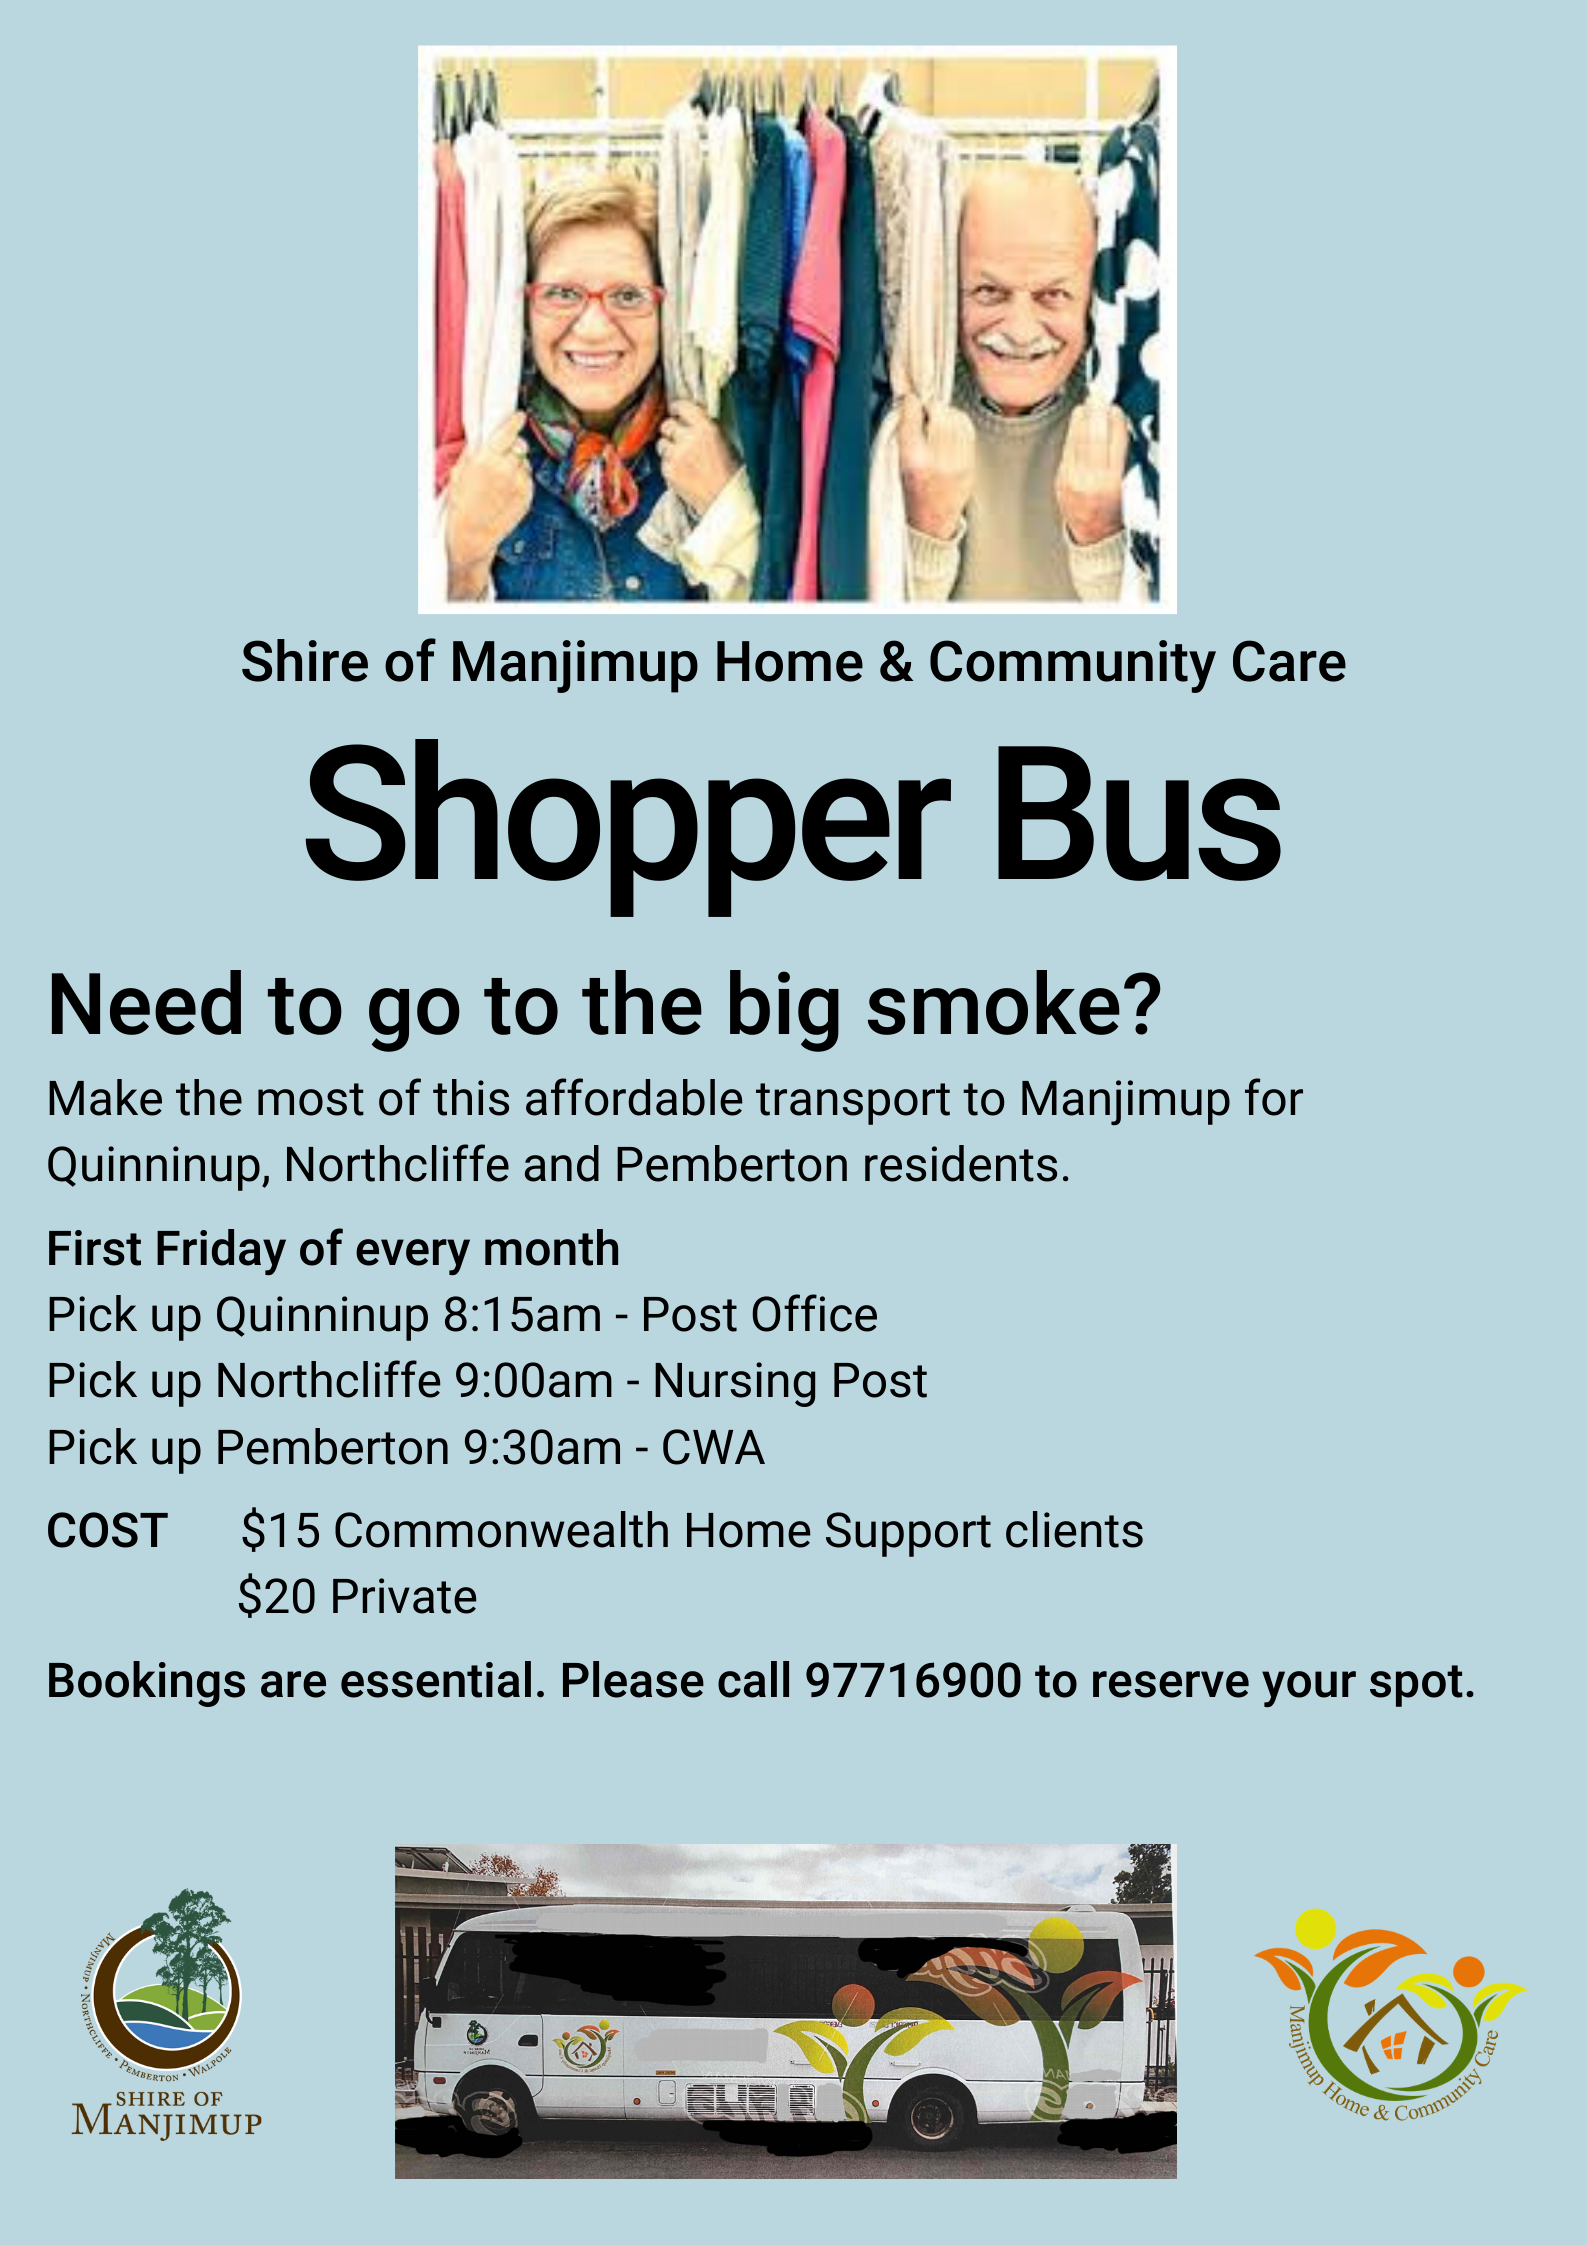 advertisement for shopper bus